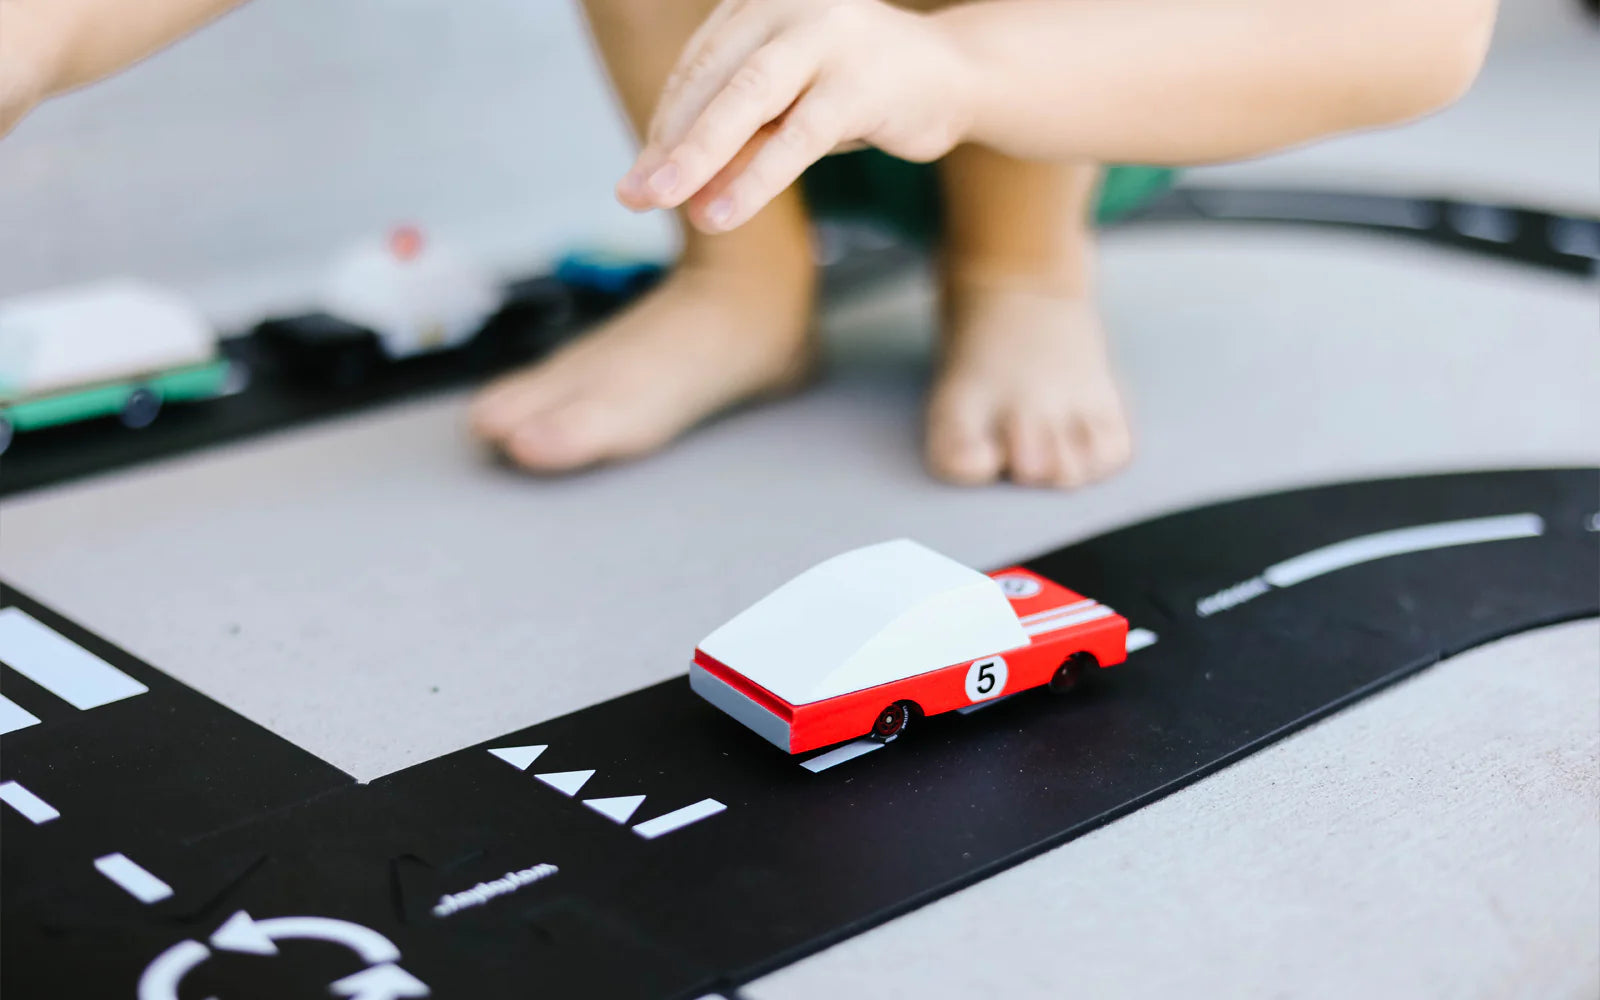 Candylab Red Racer #5 wooden diecast toy car for kids